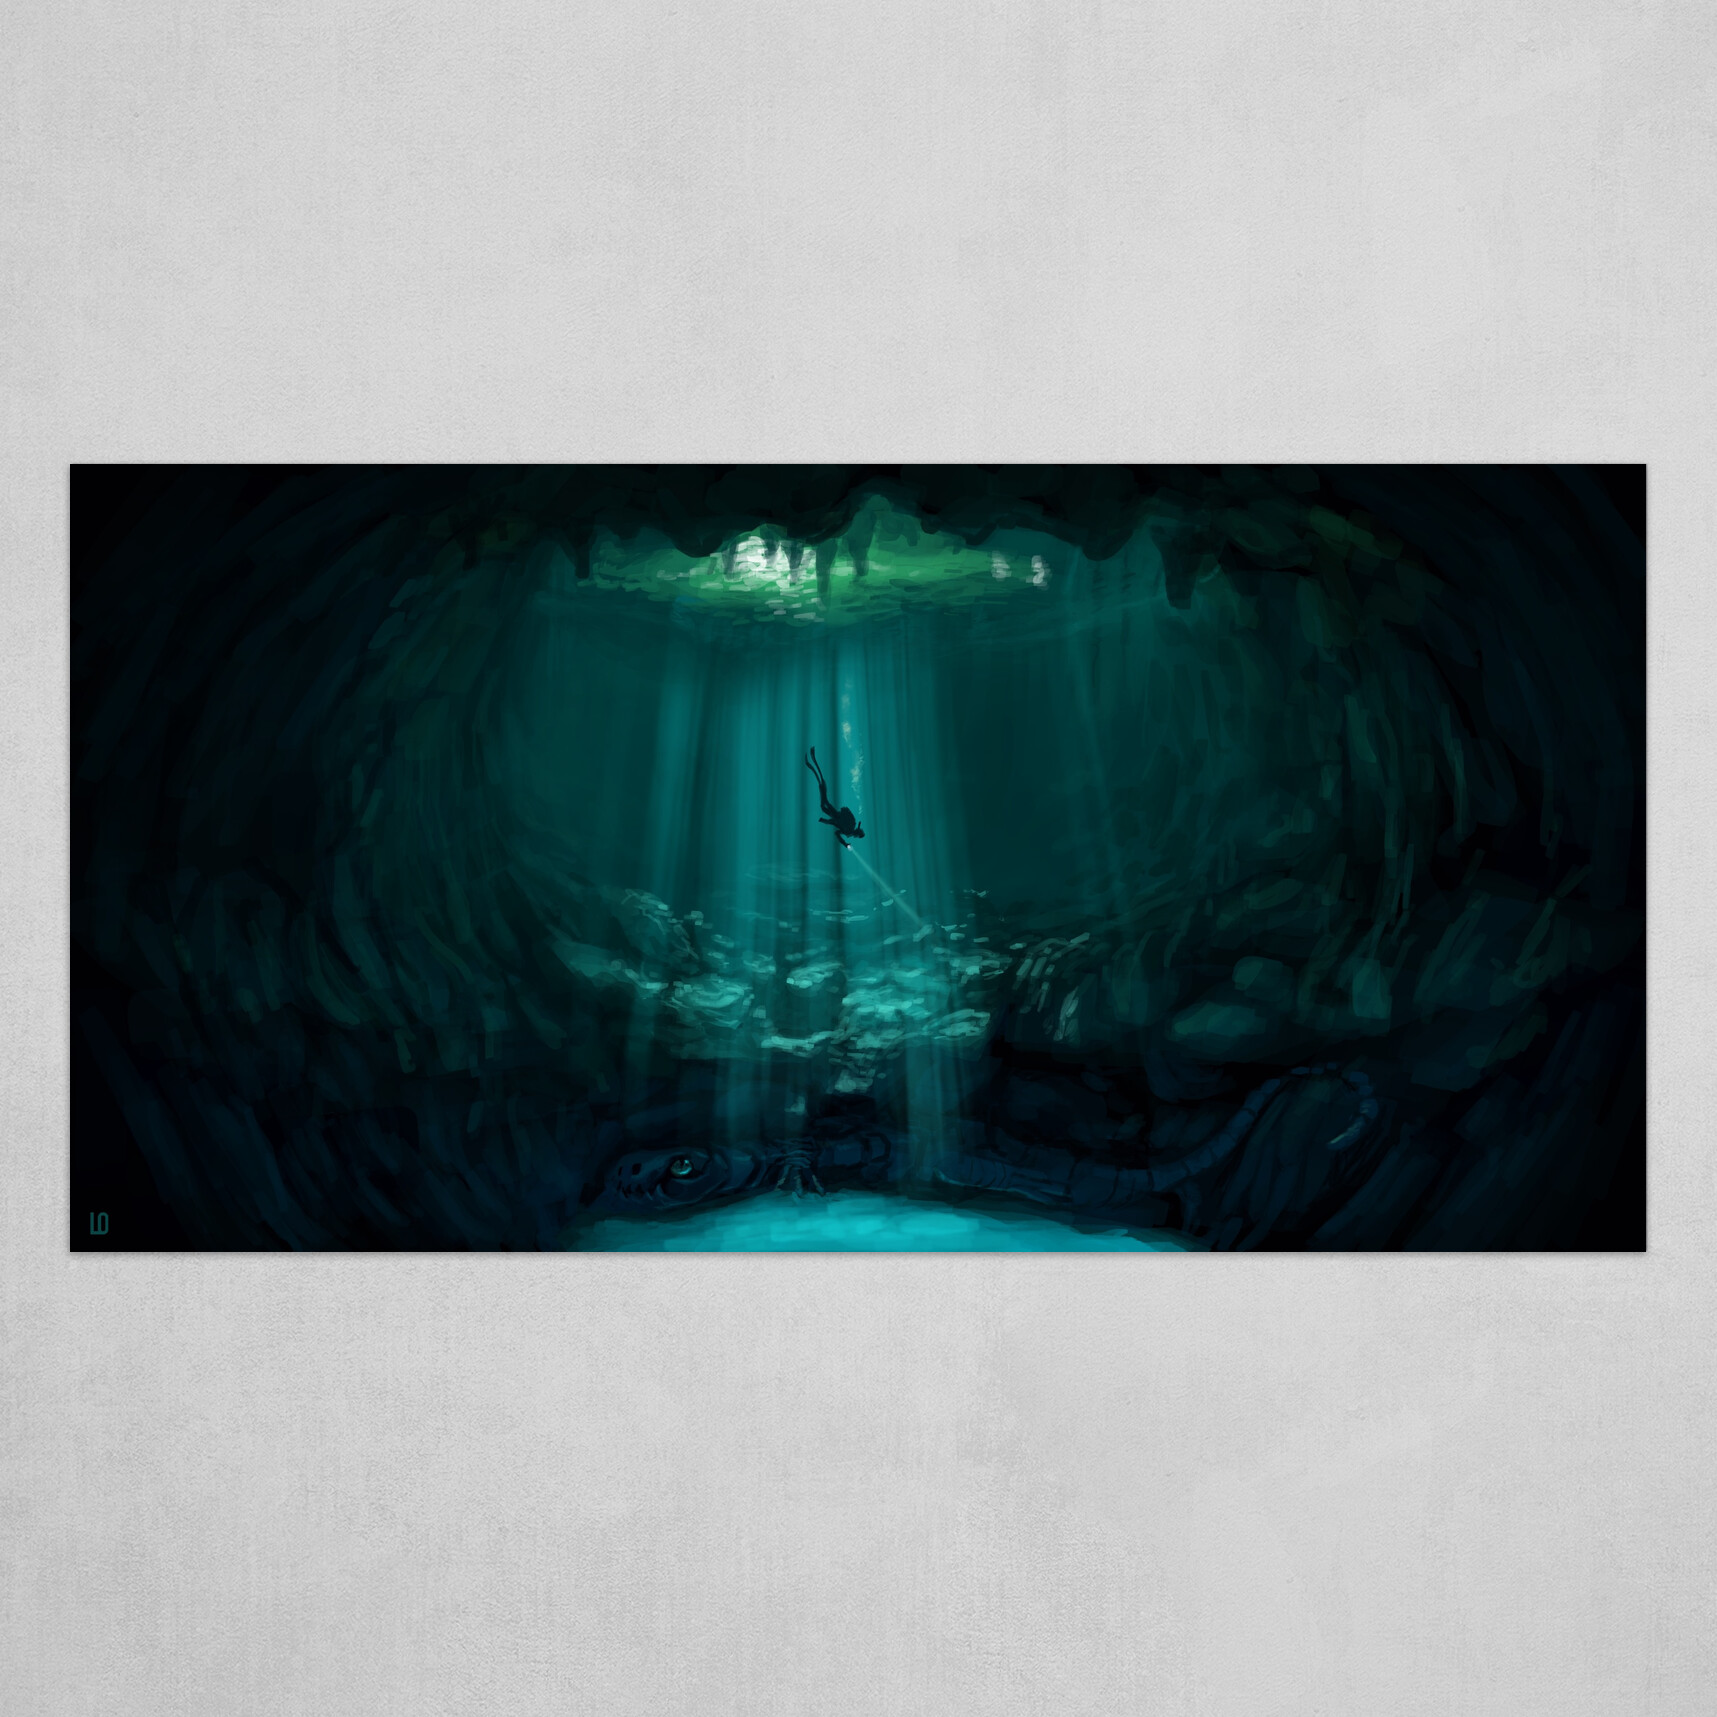 Underwater environment #592